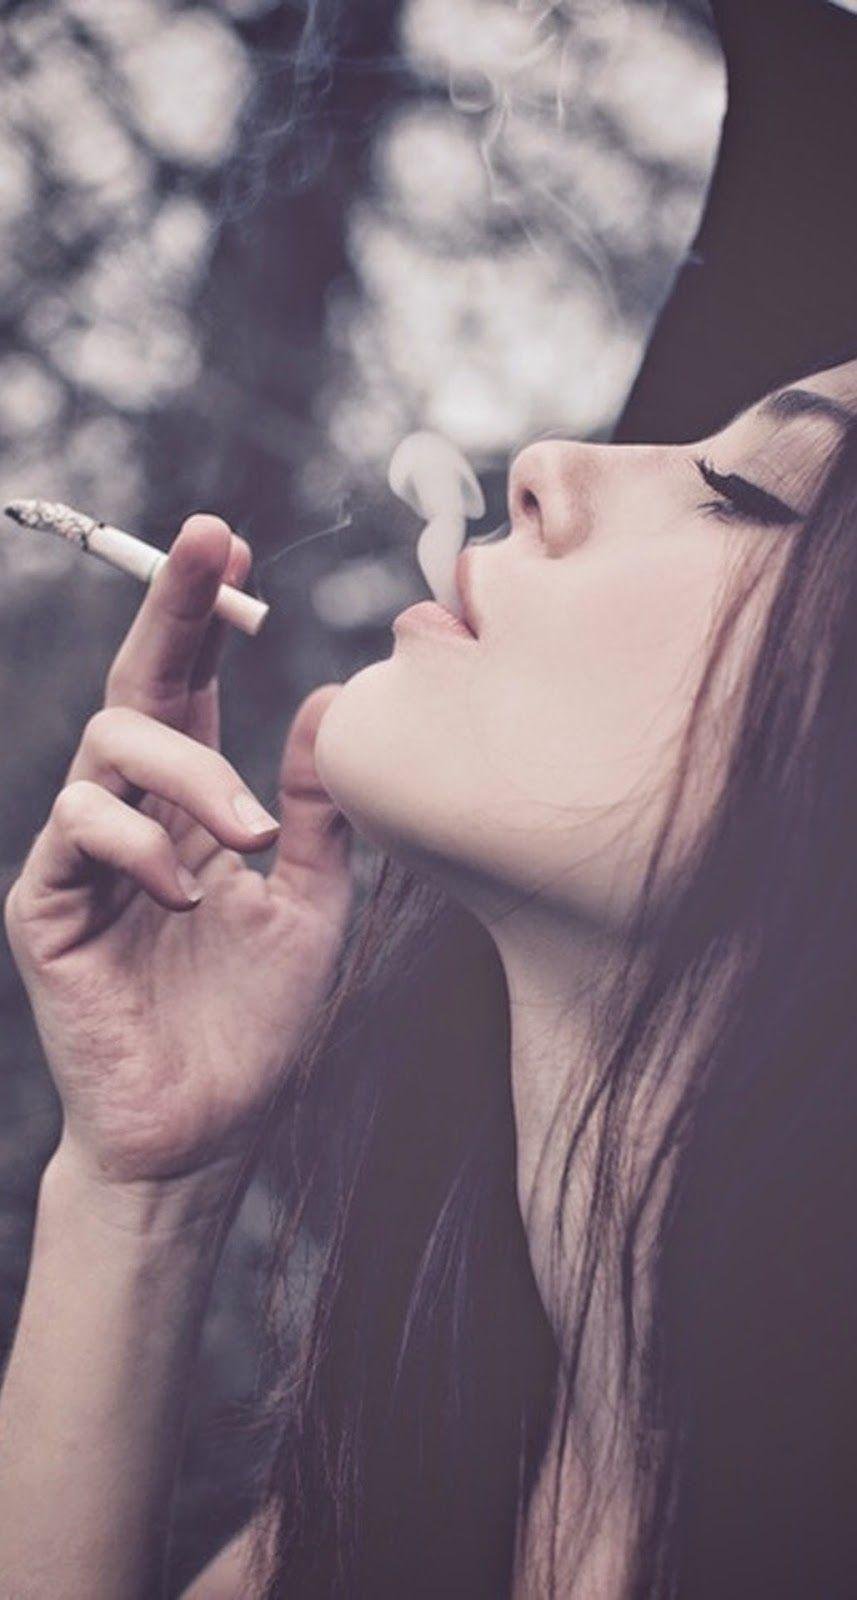 Girl Smoking - Attitude Wallpaper Download | MobCup